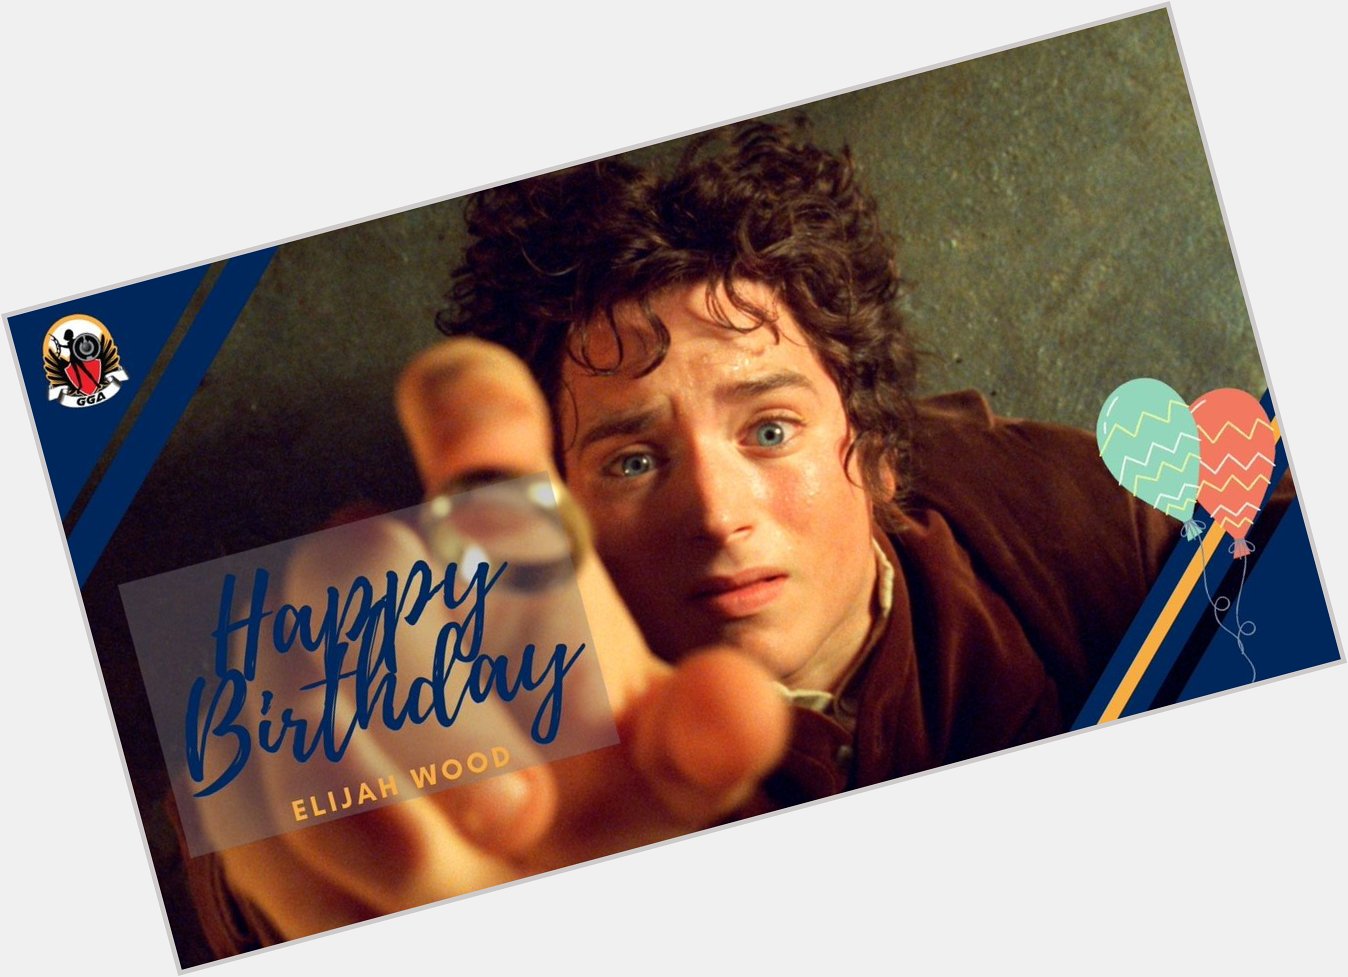 Happy birthday Elijah Wood, our favorite Frodo Baggins!   